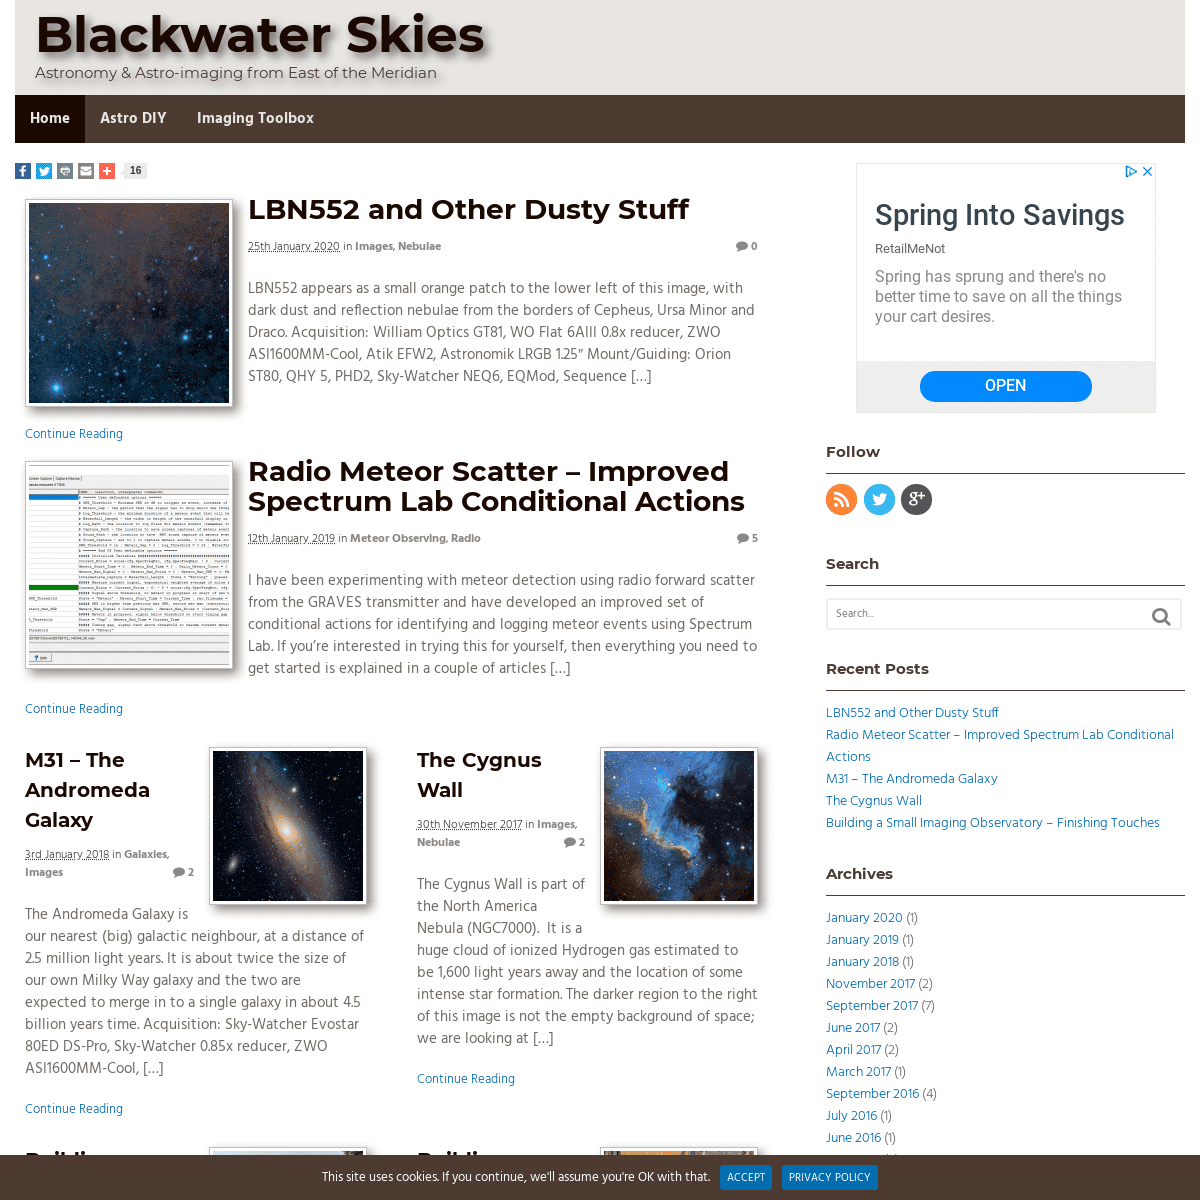 A complete backup of blackwaterskies.co.uk